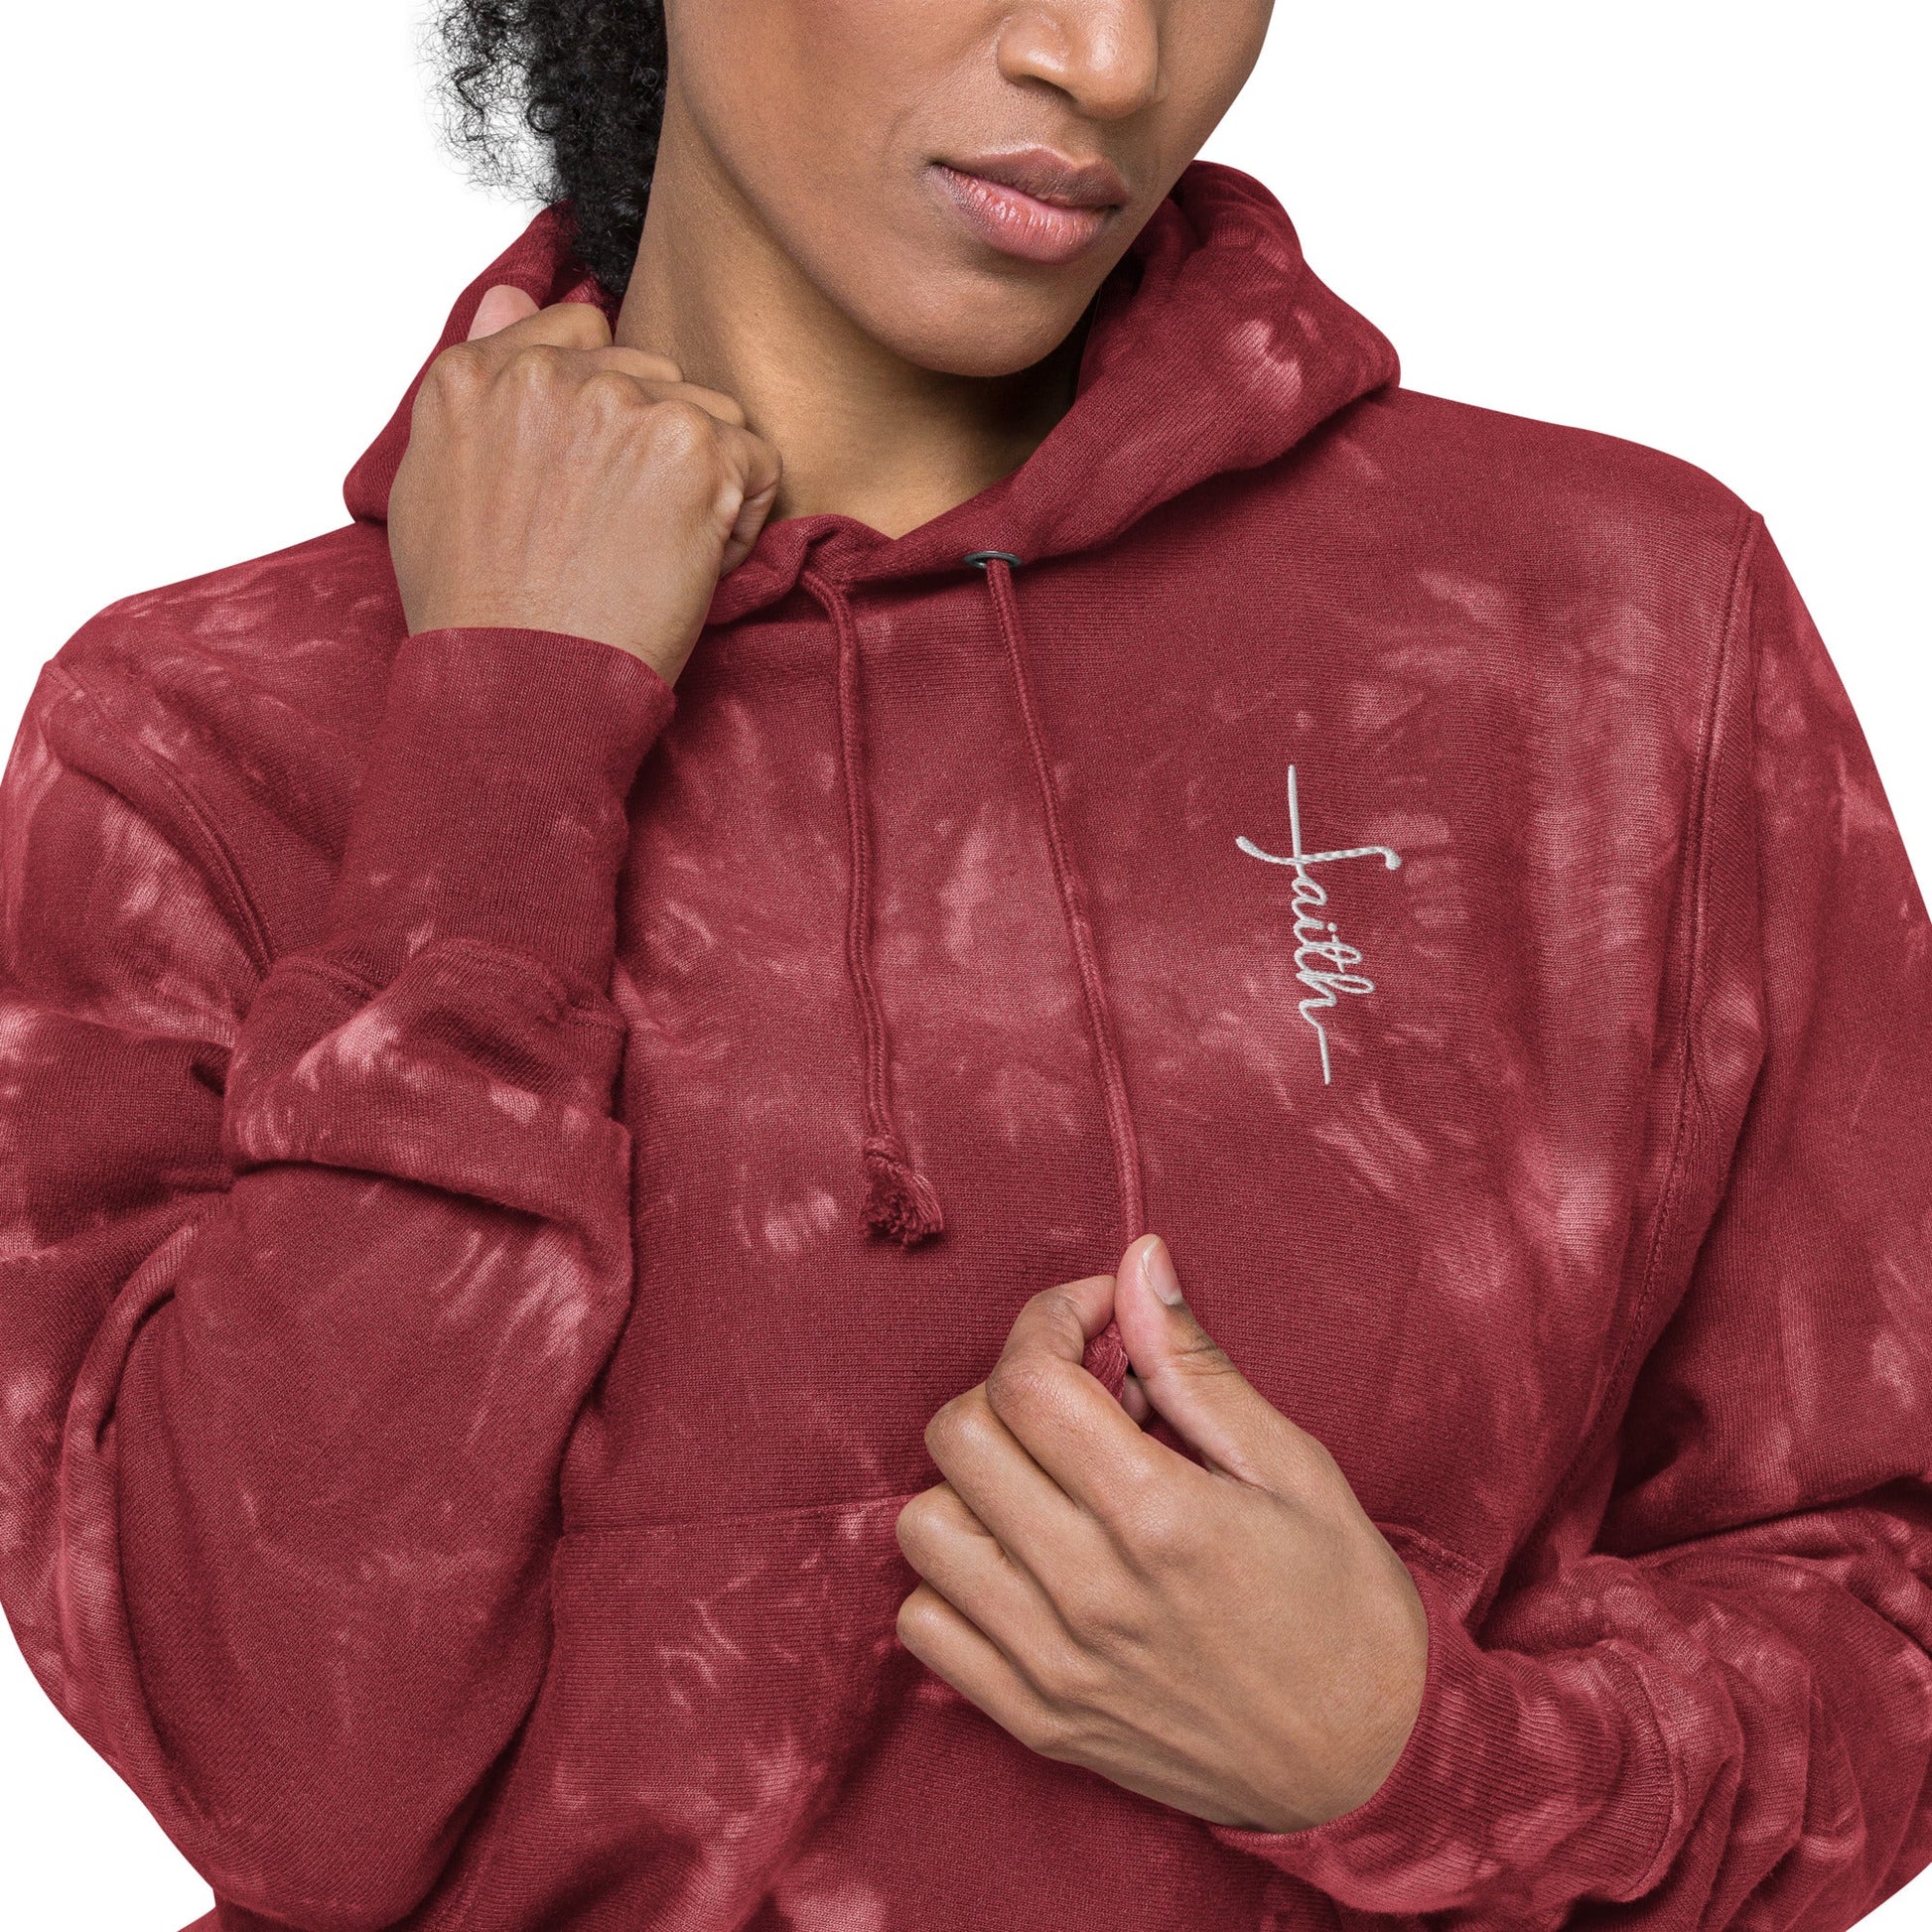 Unisex Tie-Dye Hoodie with Embroidered "Faith" Cross - faithbook